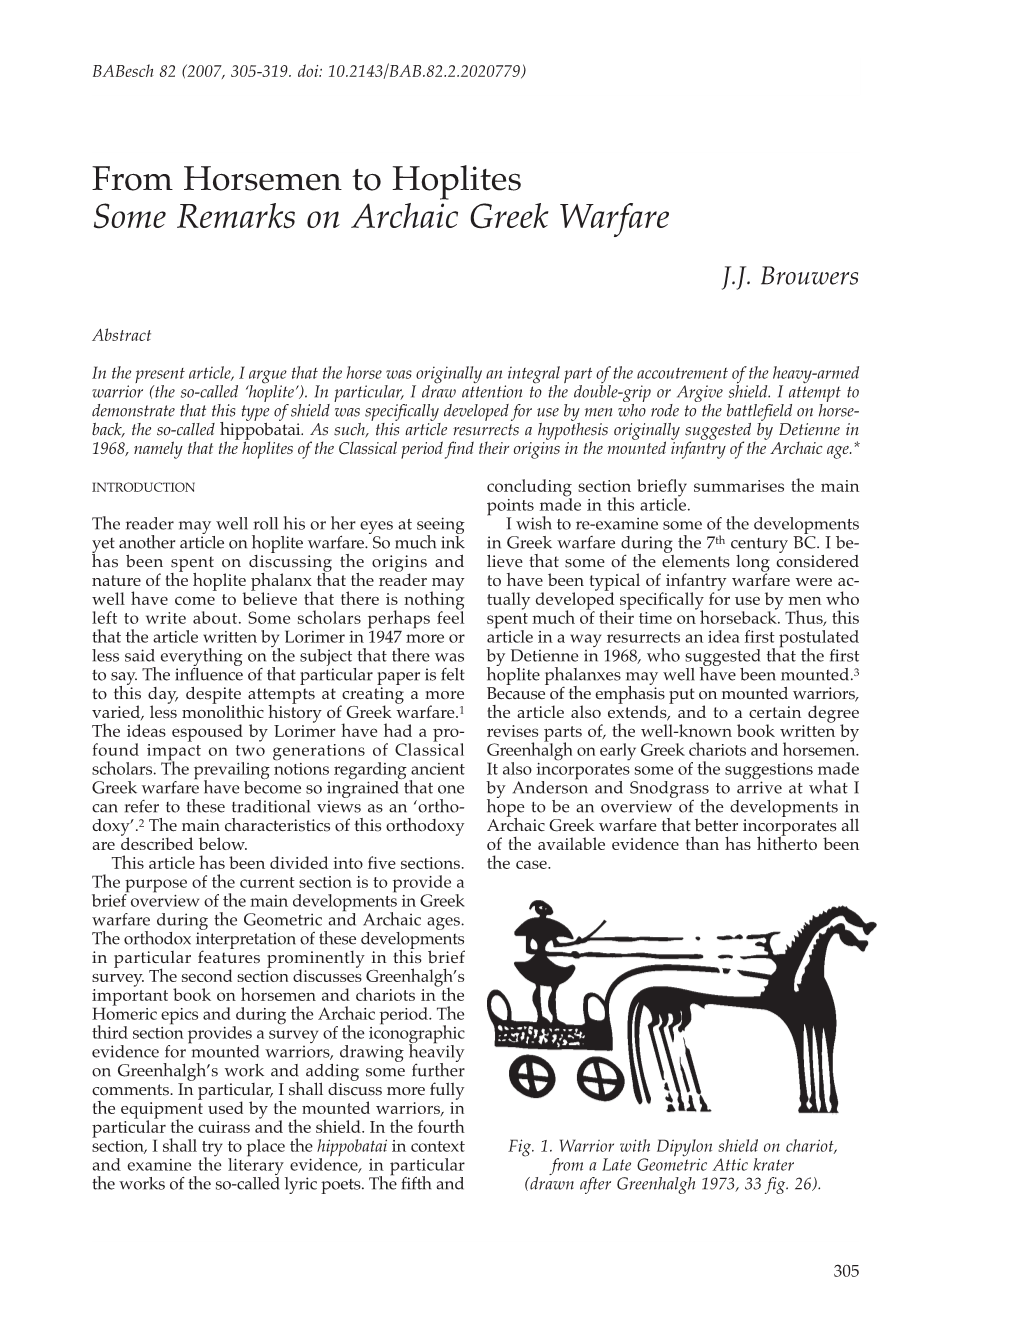 From Horsemen to Hoplites Some Remarks on Archaic Greek Warfare